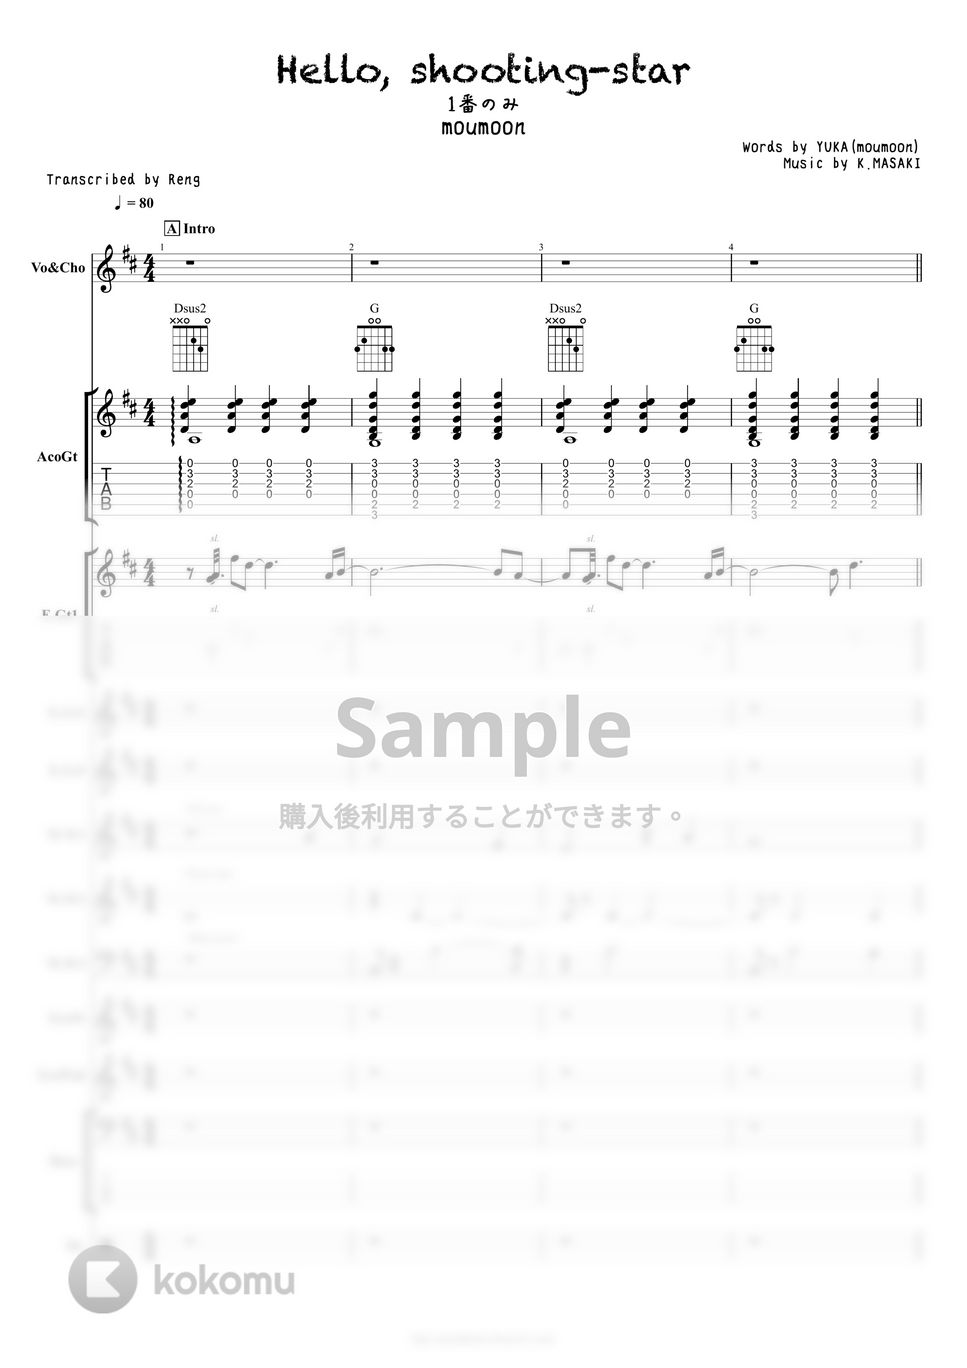 moumoon - Hello,shooting-star (バンドスコア/アニメ『暗殺教室』/TAB譜/ドラム譜) by Score by Reng